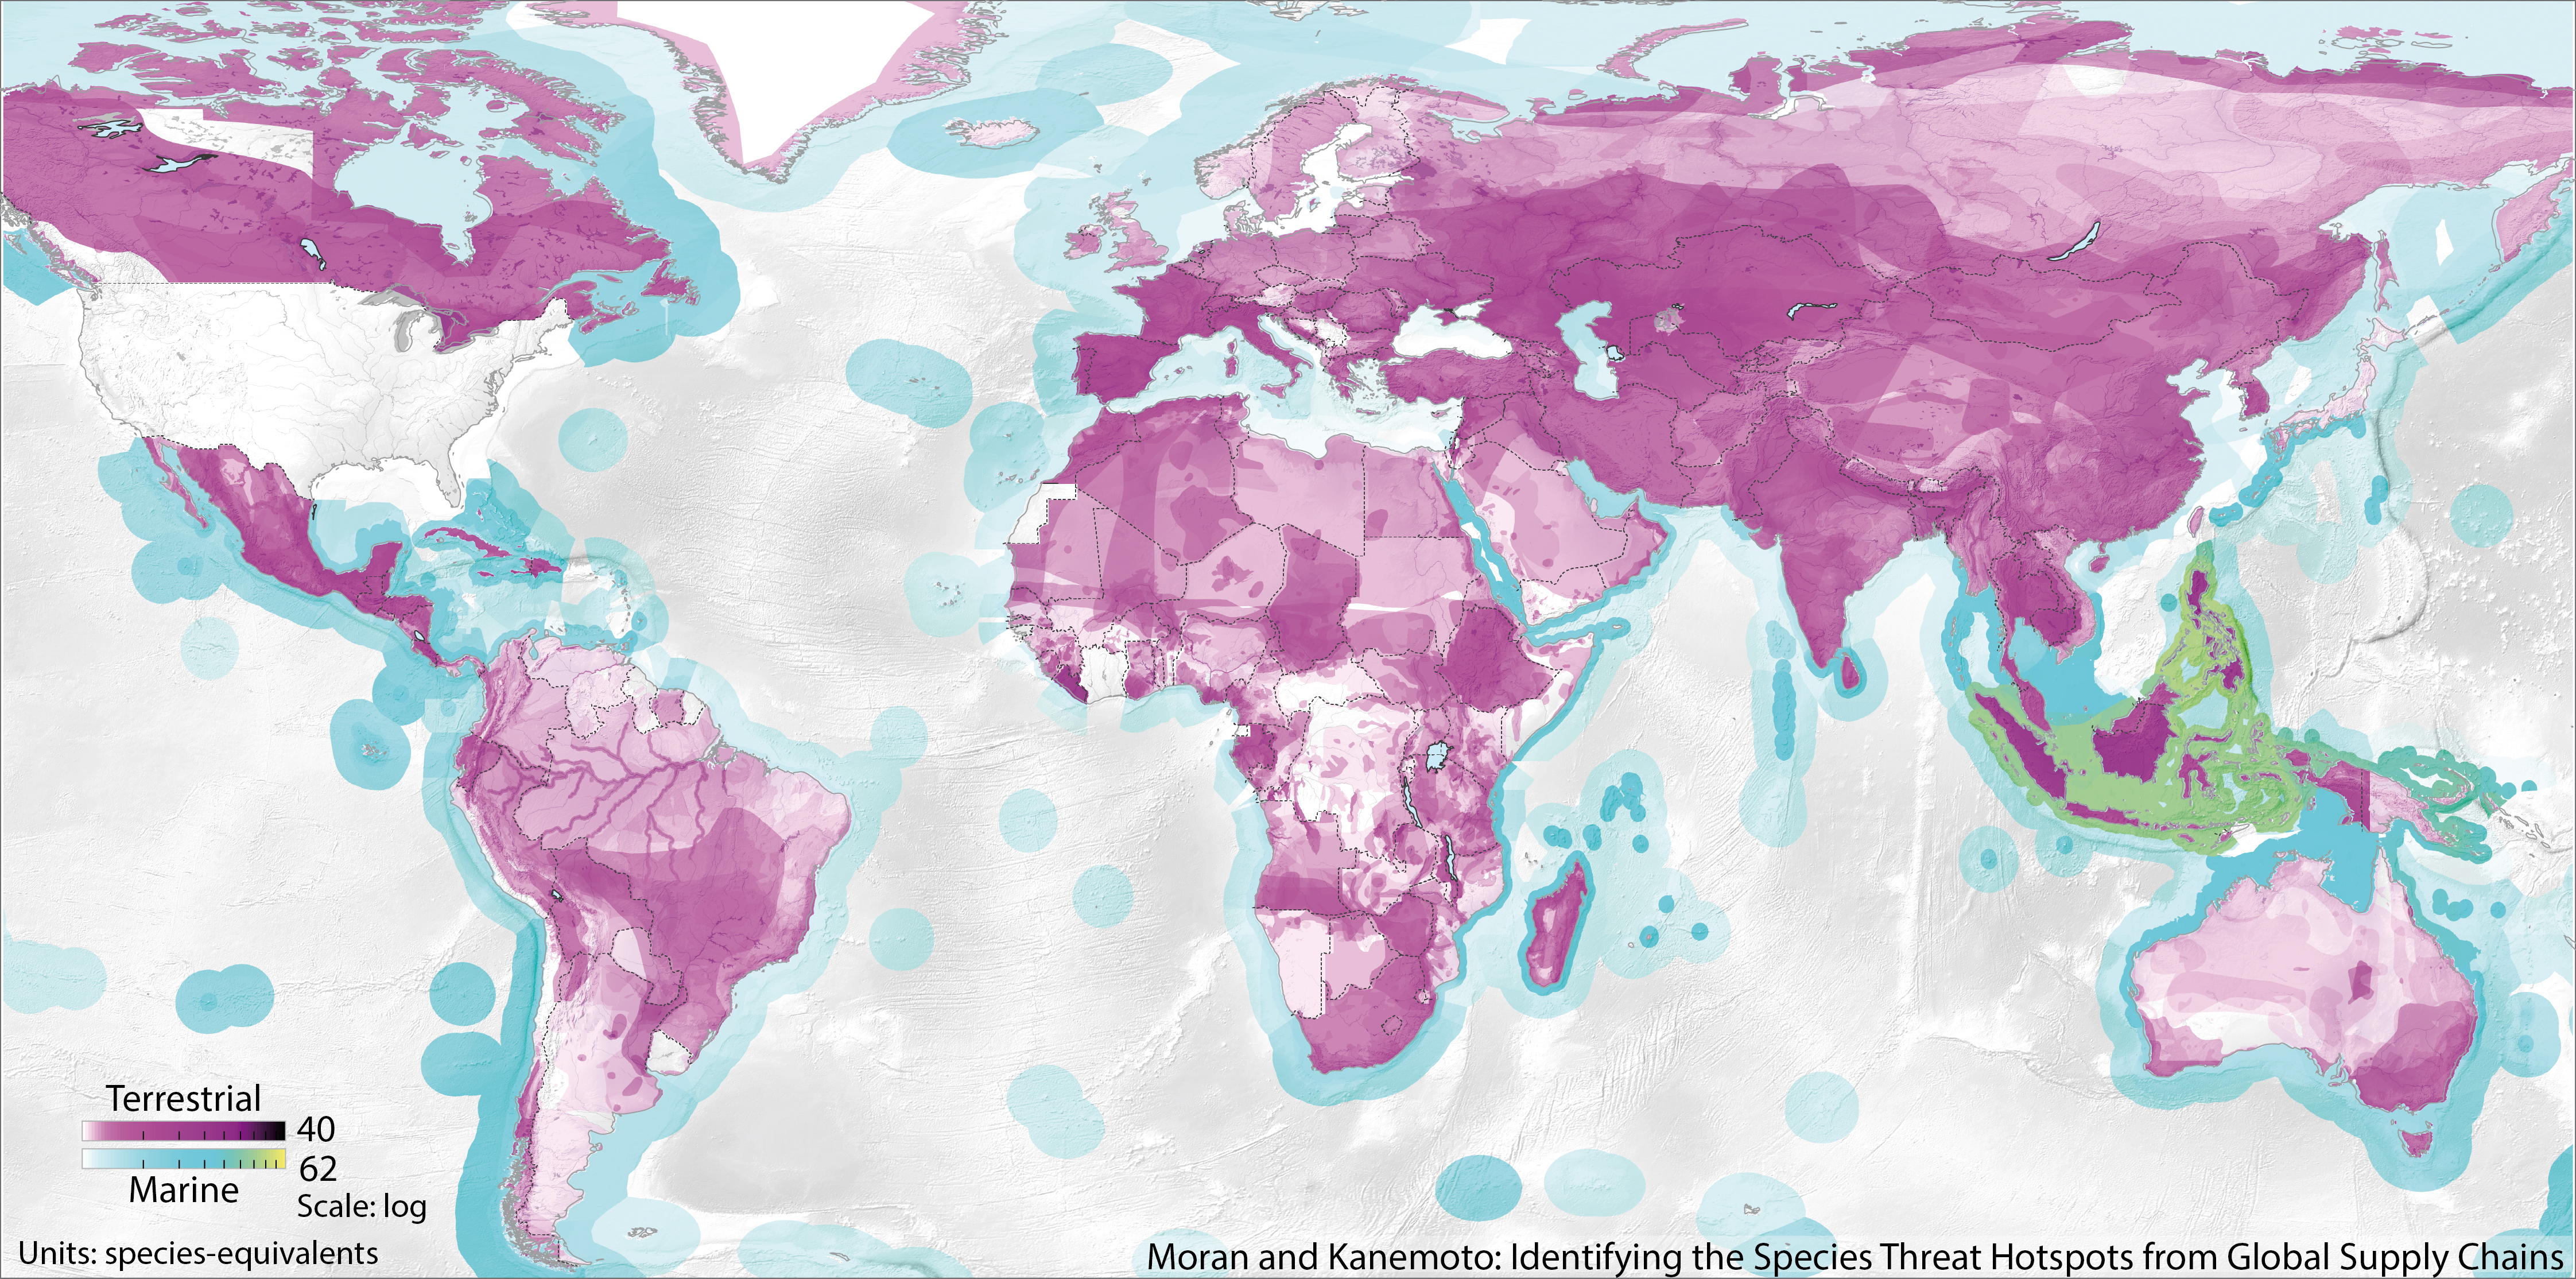 Darker purple and green regions indicate the regions where exports to the U.S. most damage biodiversity. (Courtesy of Keiichiro Kanemoto and Daniel Moran/Nature Journal)